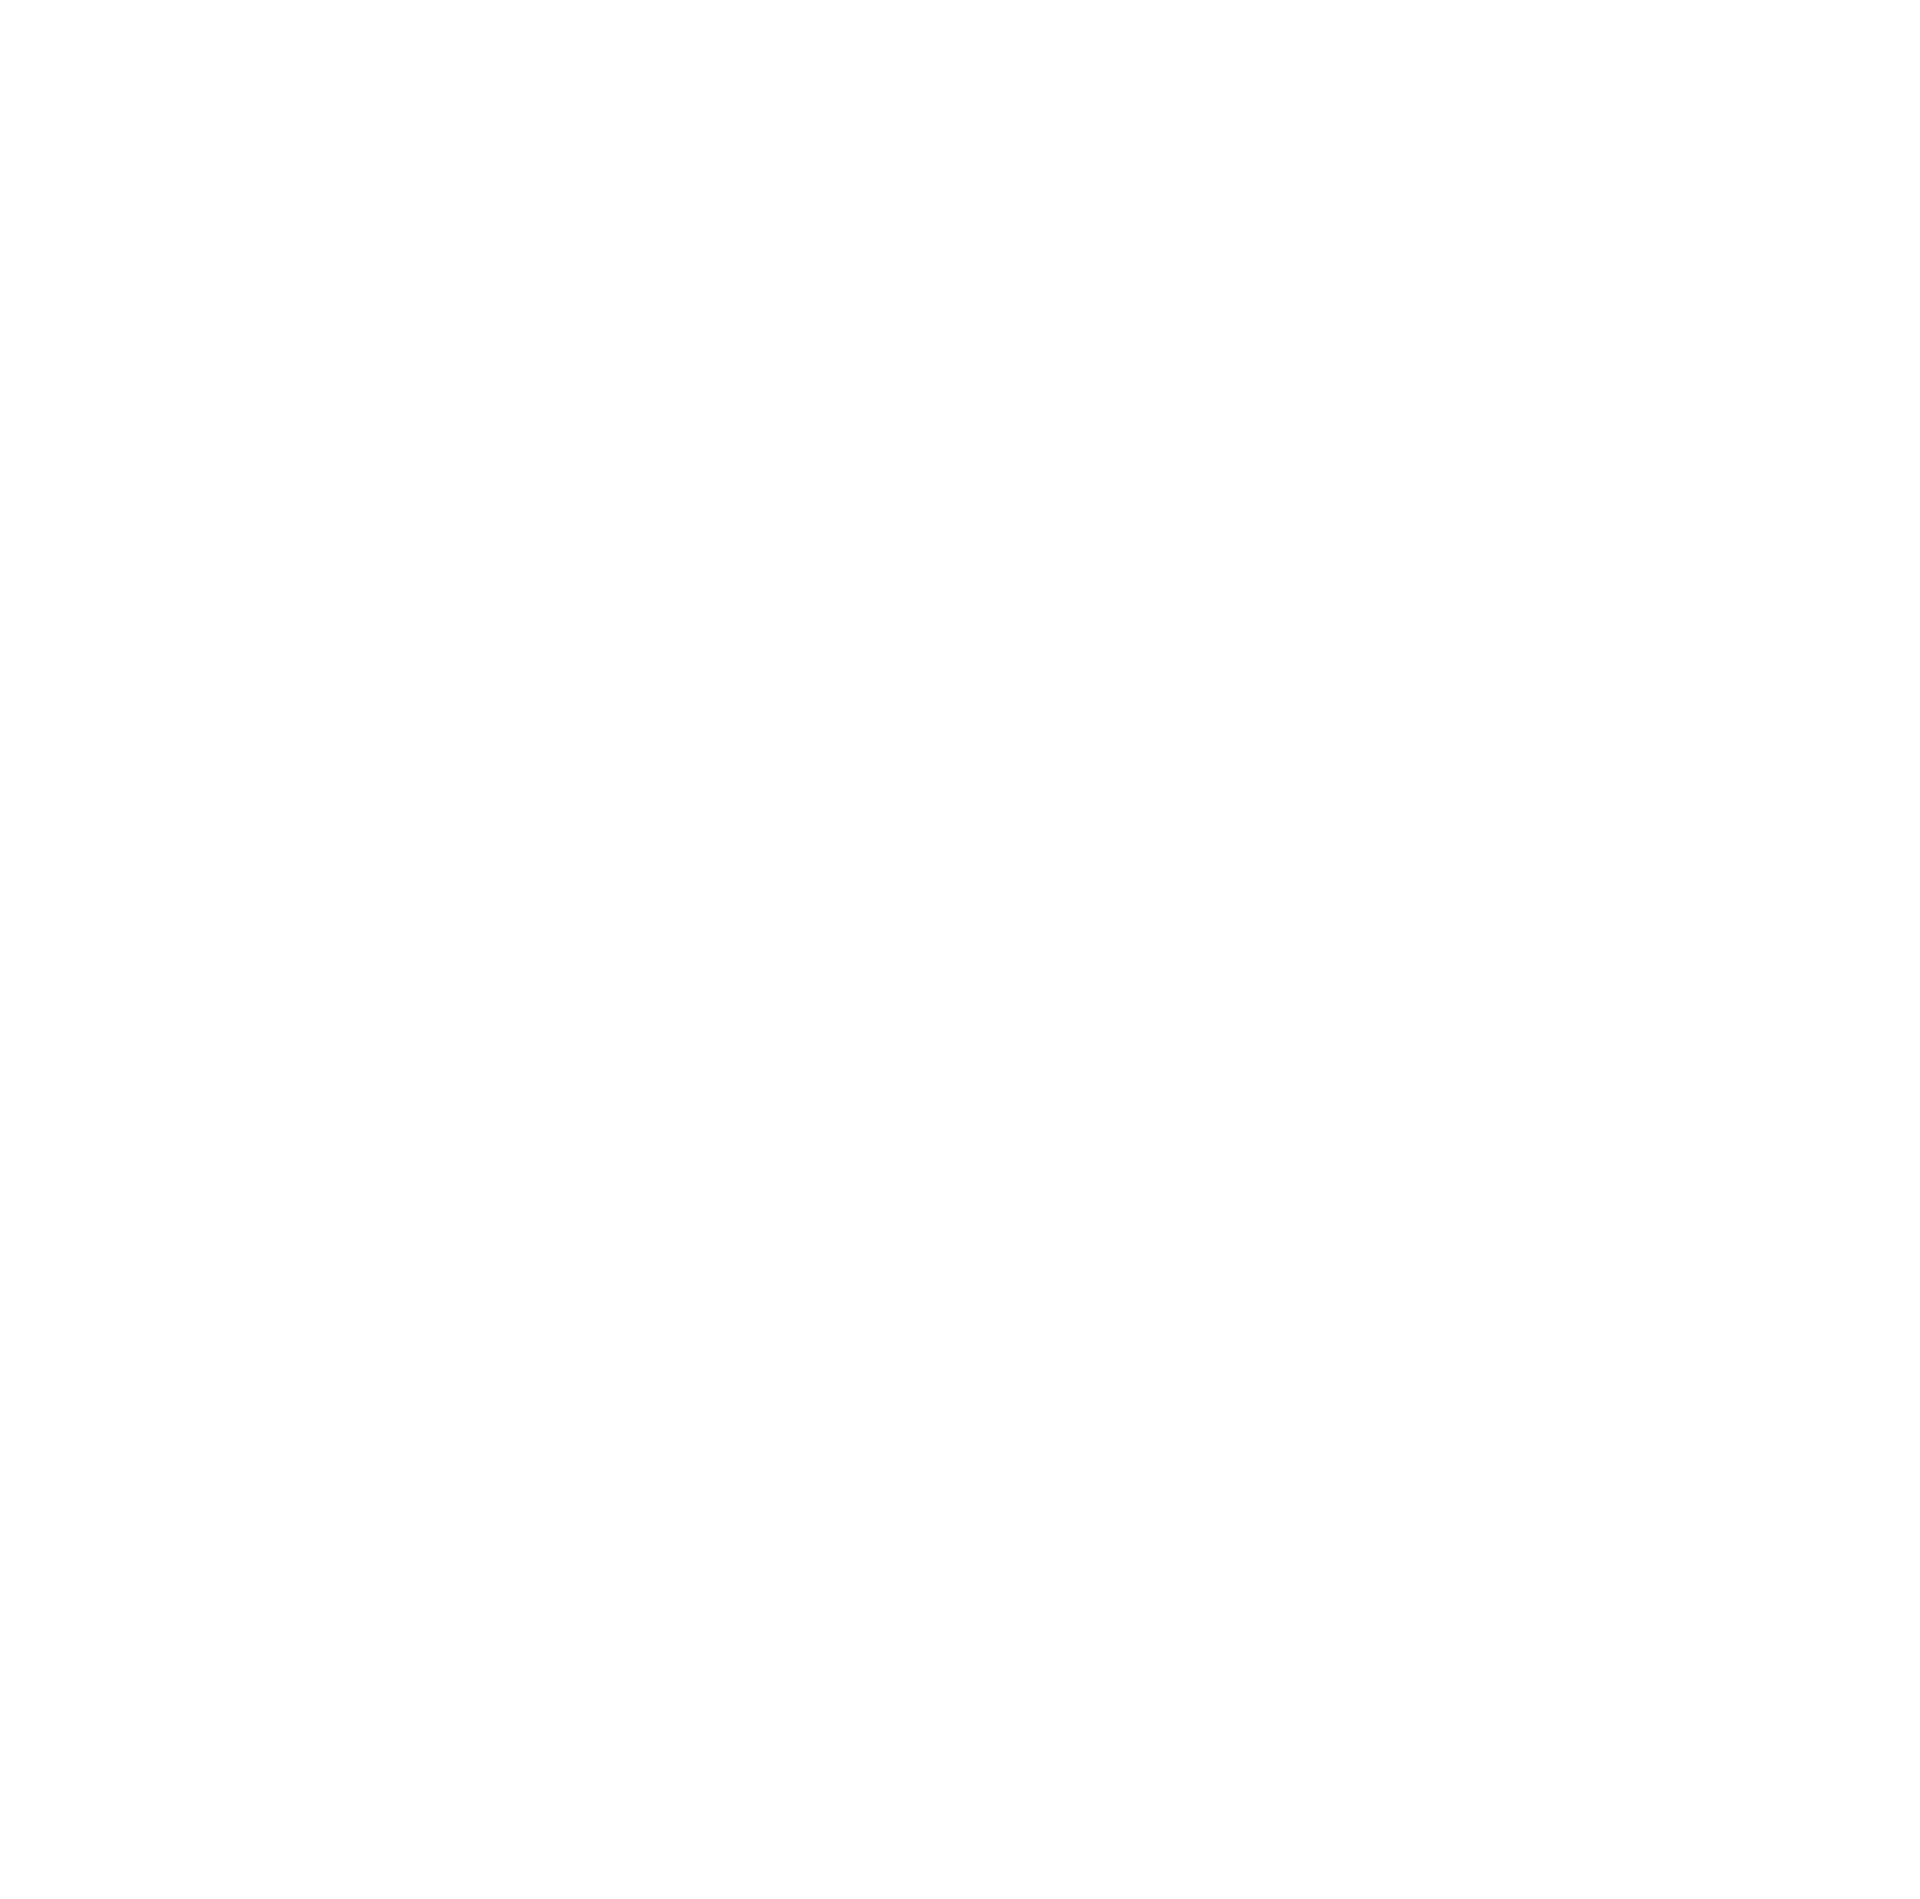 Black Creek Management